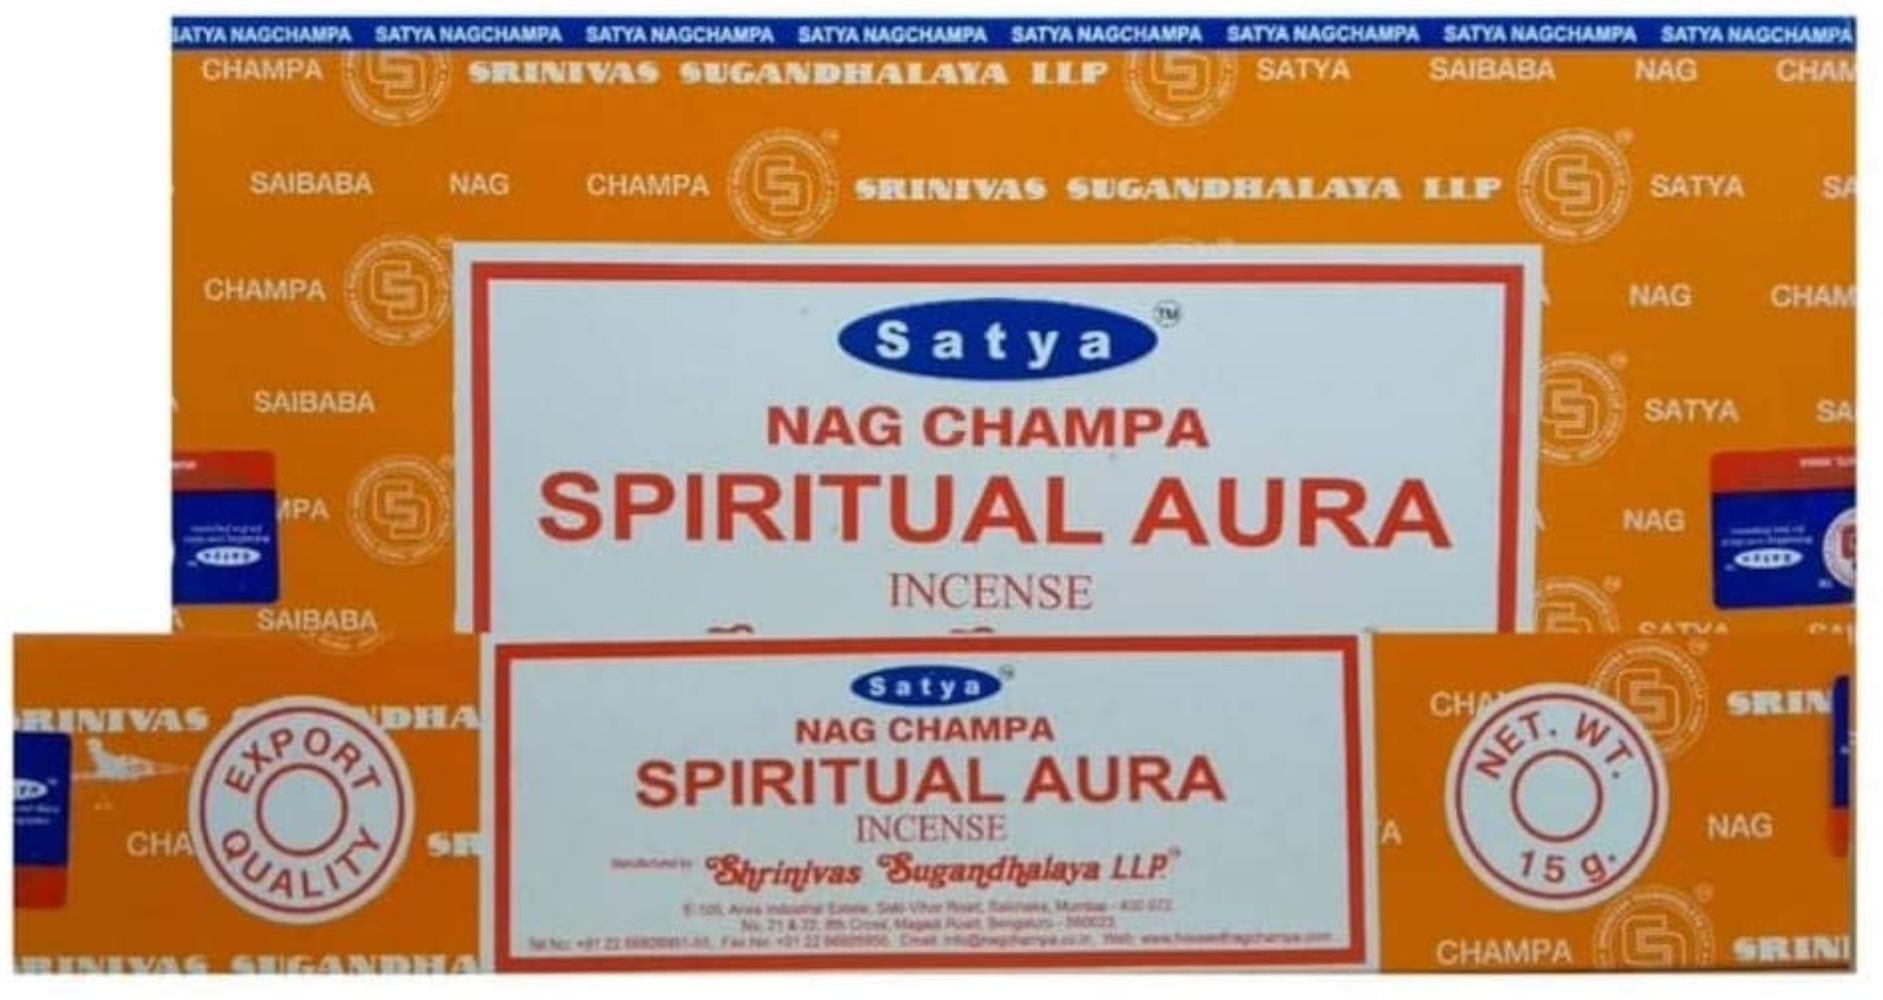 Satya Sai Baba Nag Champa Assorted Mixed Incense Sticks Fragrance Agarbatti 180g 